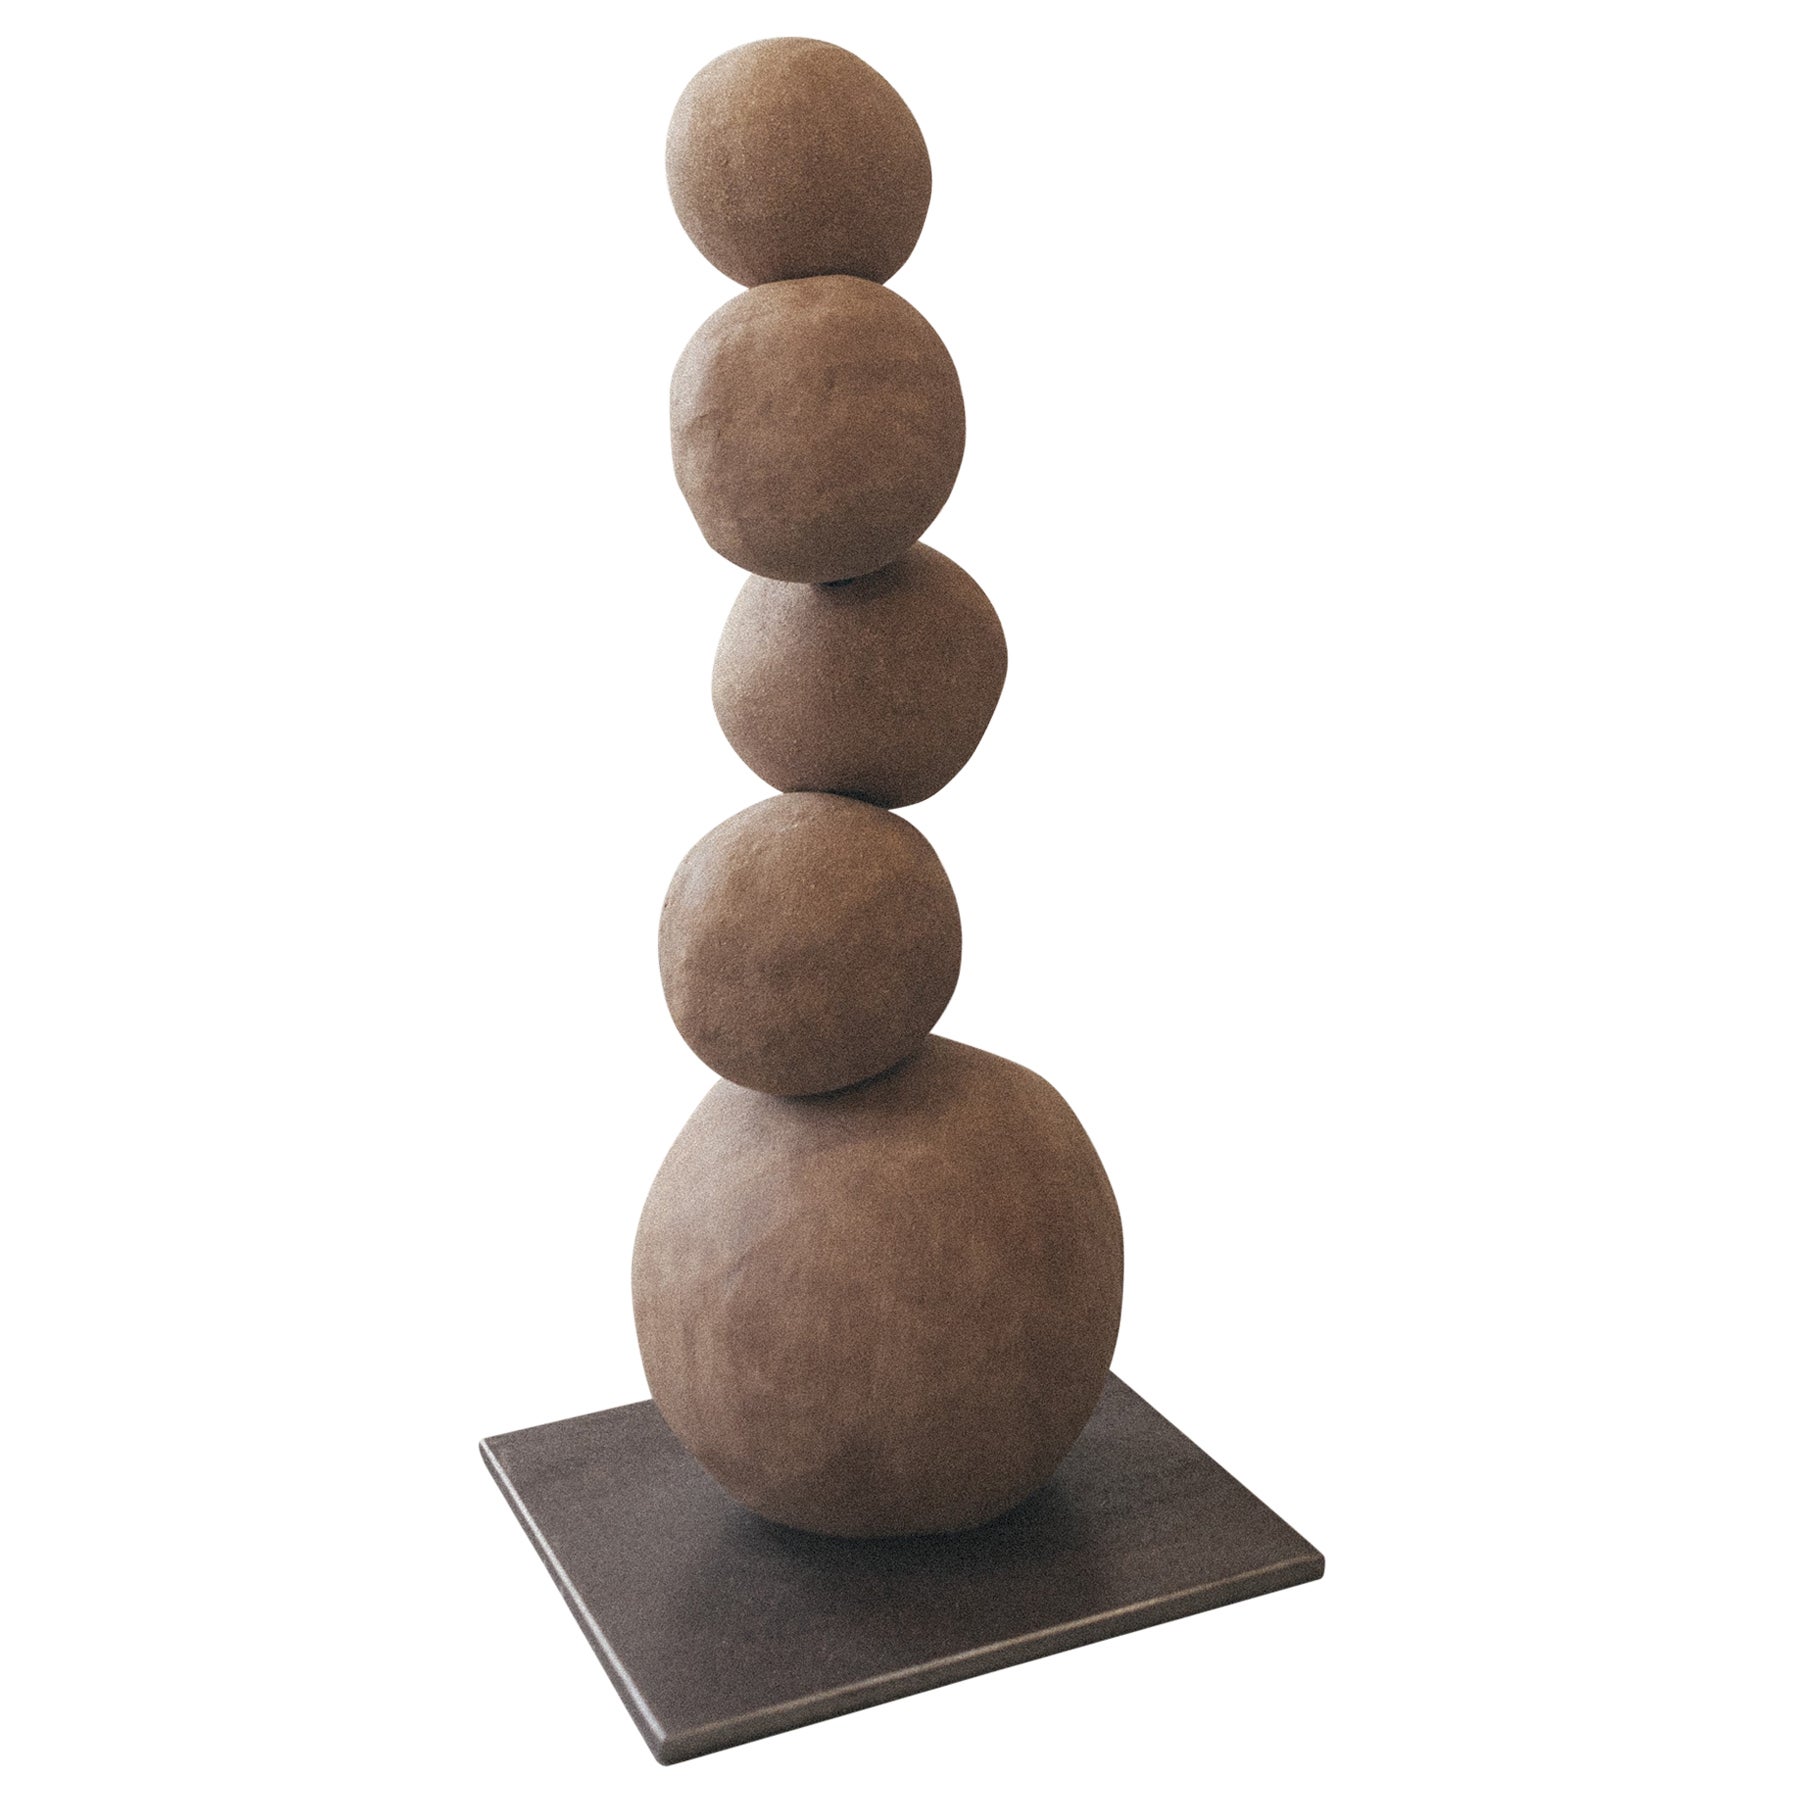 Looking for Equilibrium Sculpture by MCB Ceramics